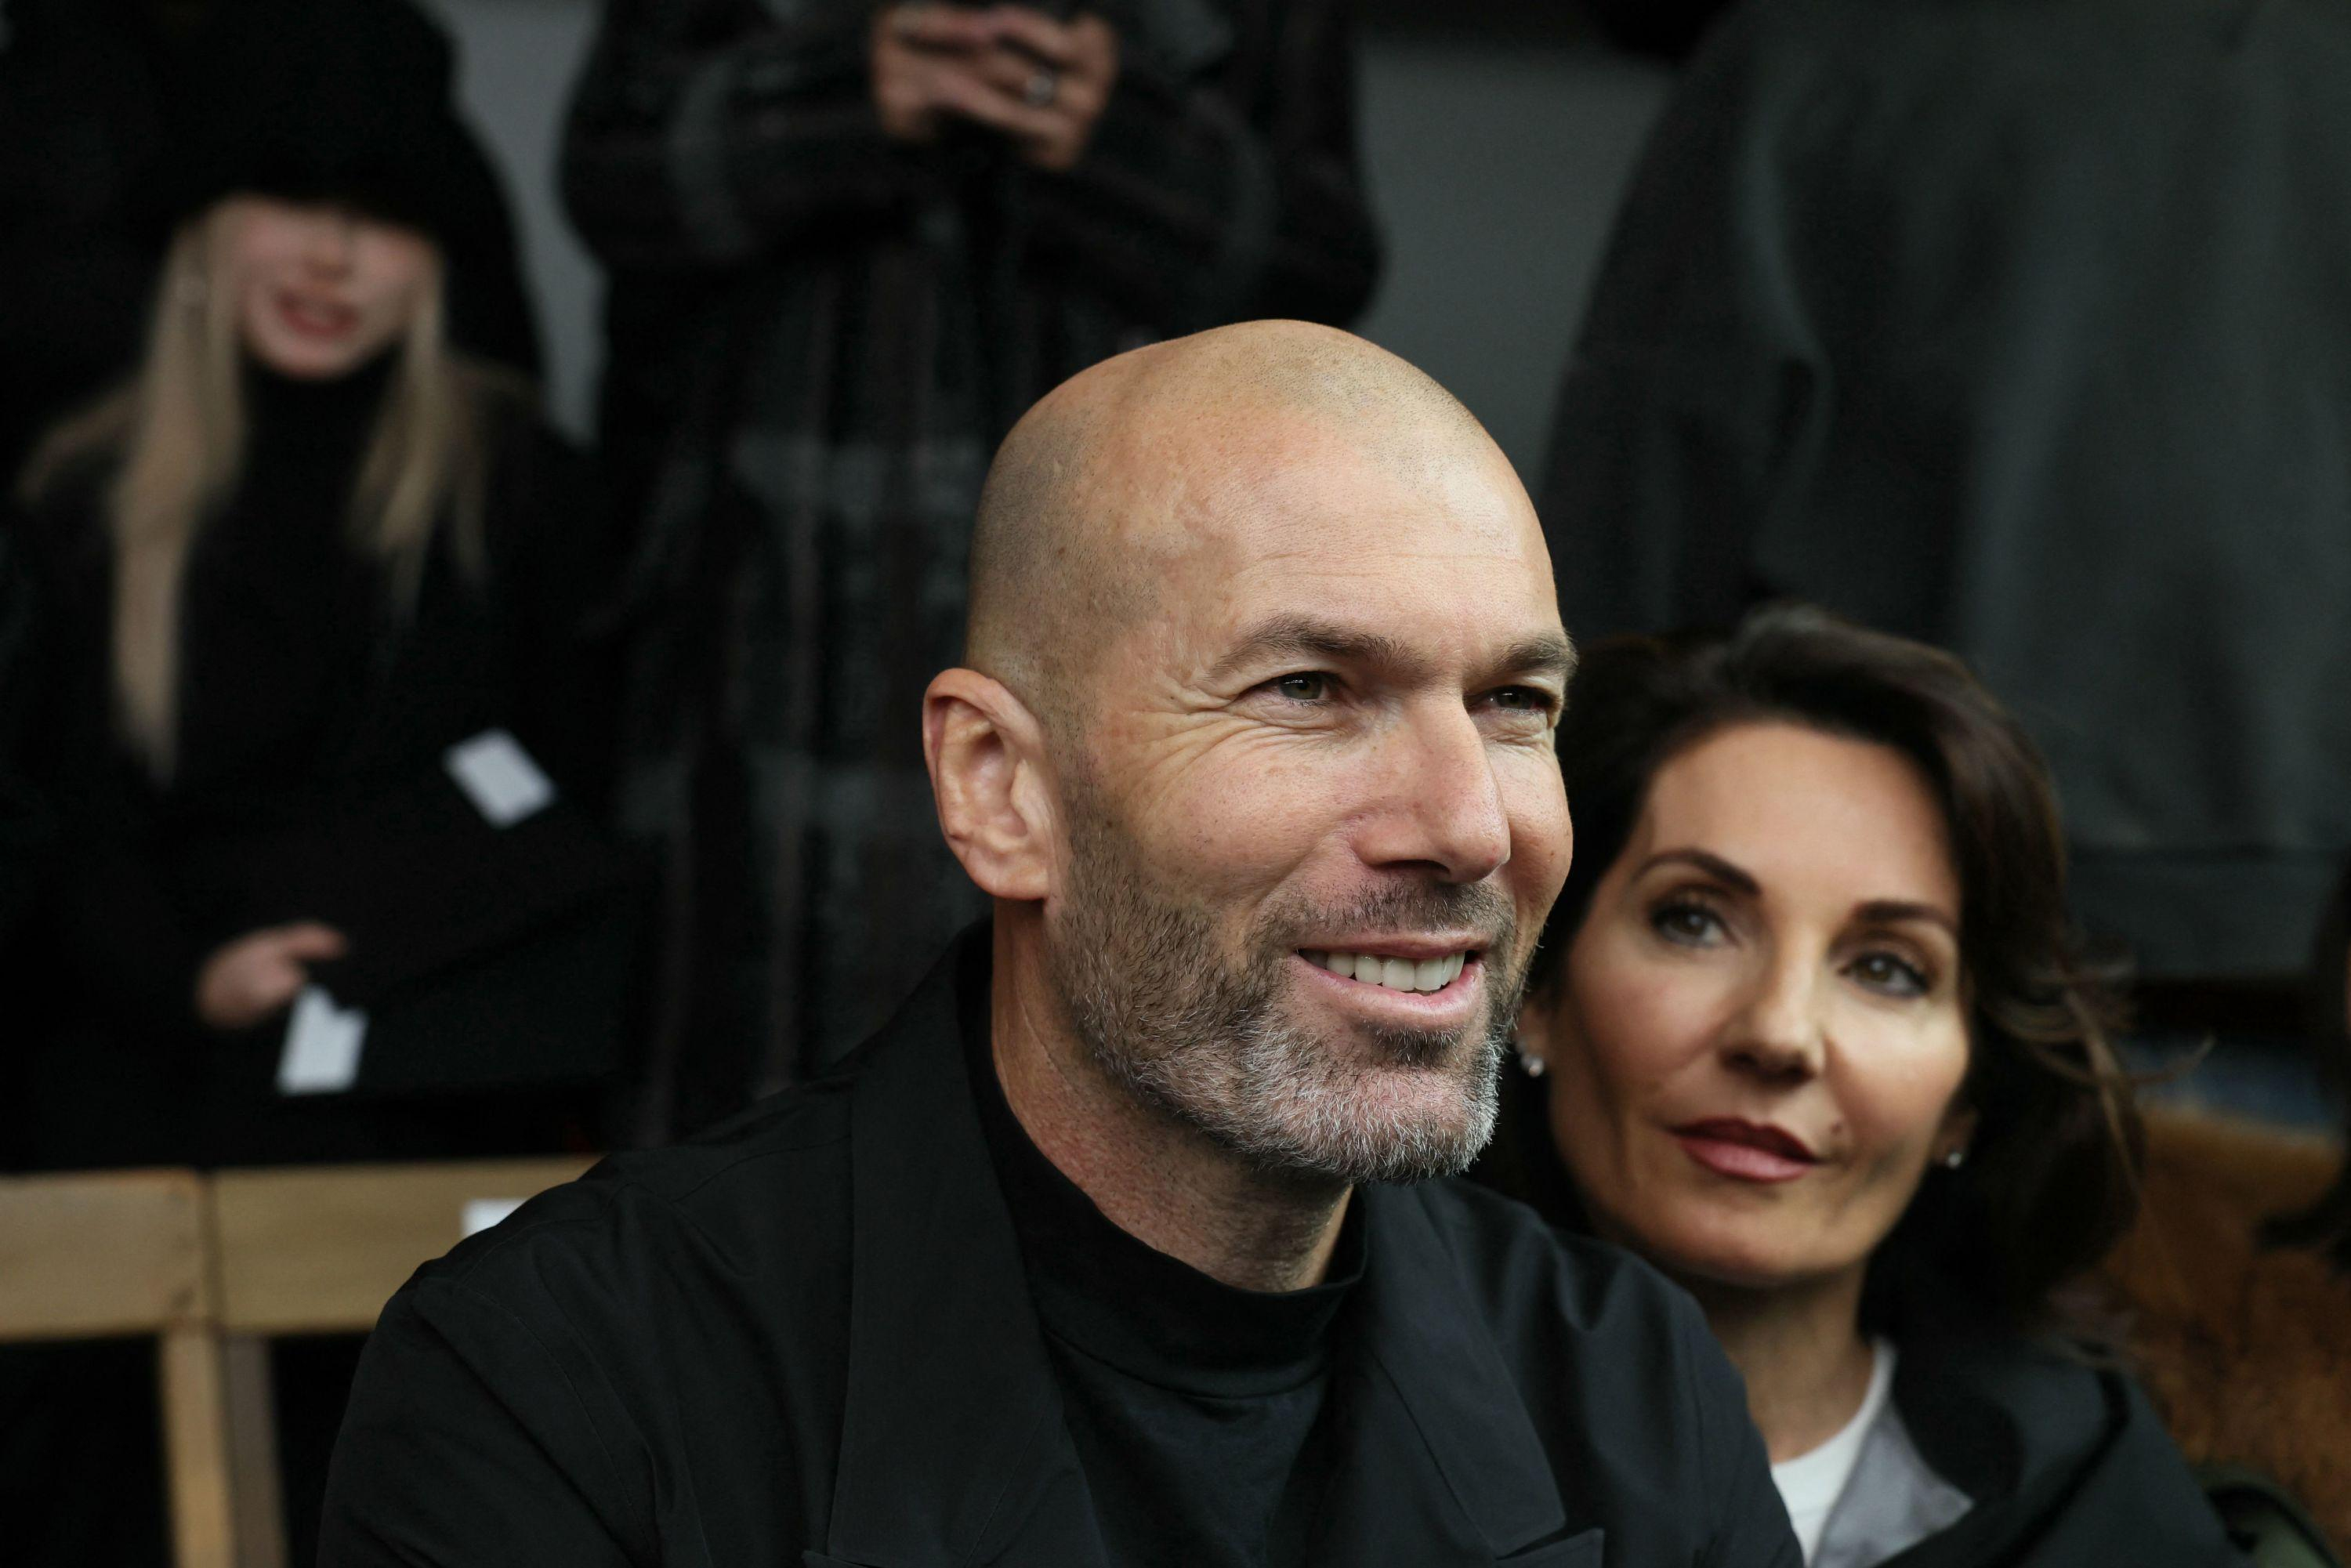 Mercato: Zidane “politely” refuses Algeria